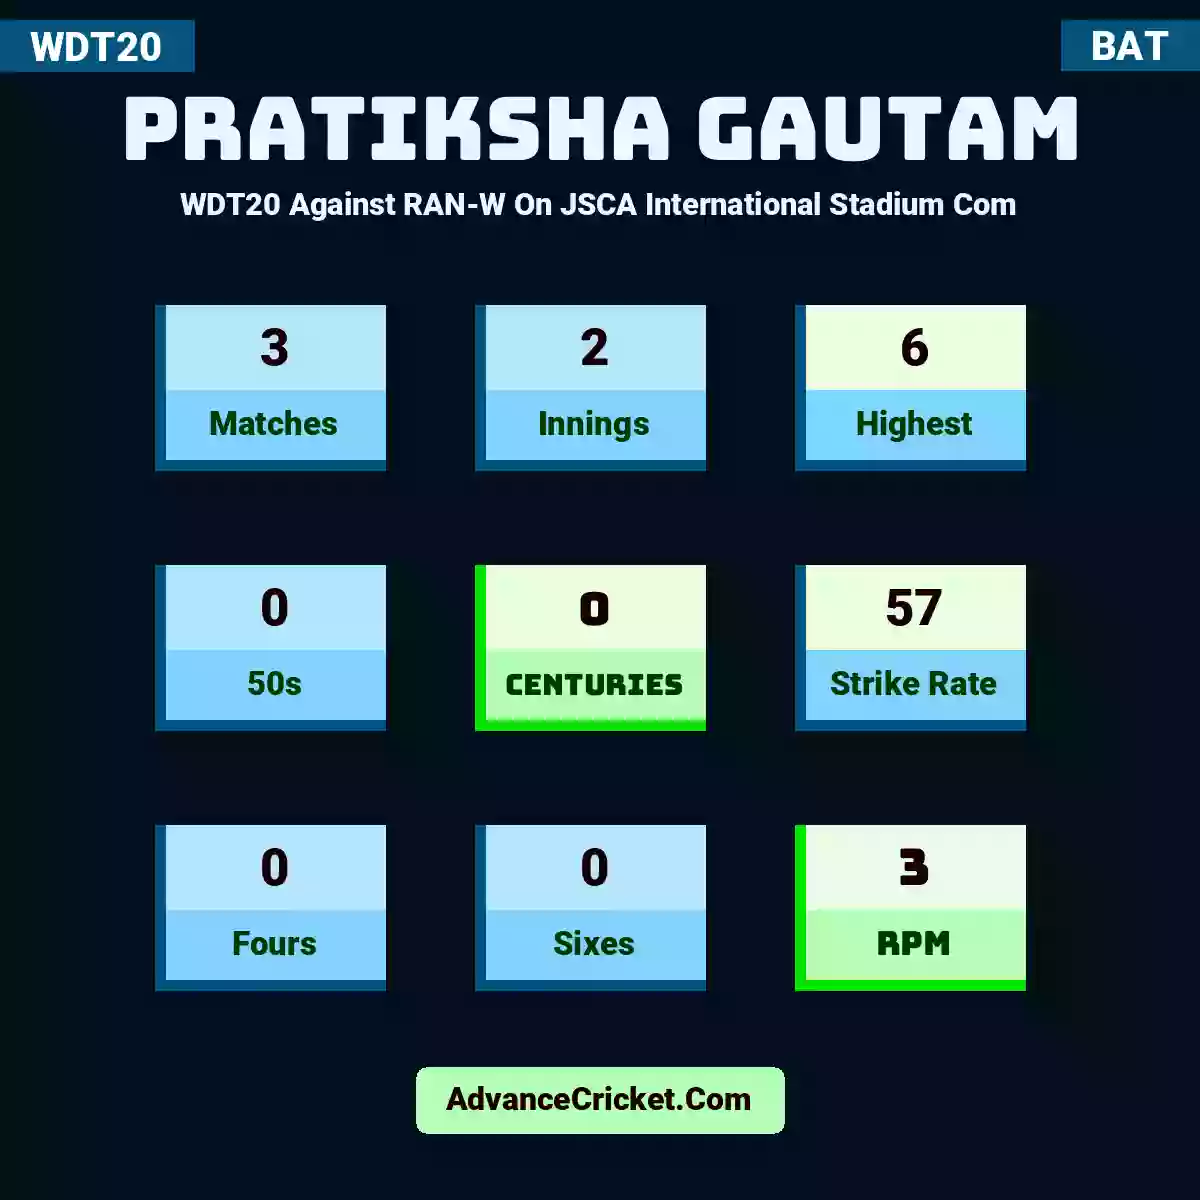 Pratiksha Gautam WDT20  Against RAN-W On JSCA International Stadium Com, Pratiksha Gautam played 3 matches, scored 6 runs as highest, 0 half-centuries, and 0 centuries, with a strike rate of 57. P.Gautam hit 0 fours and 0 sixes, with an RPM of 3.